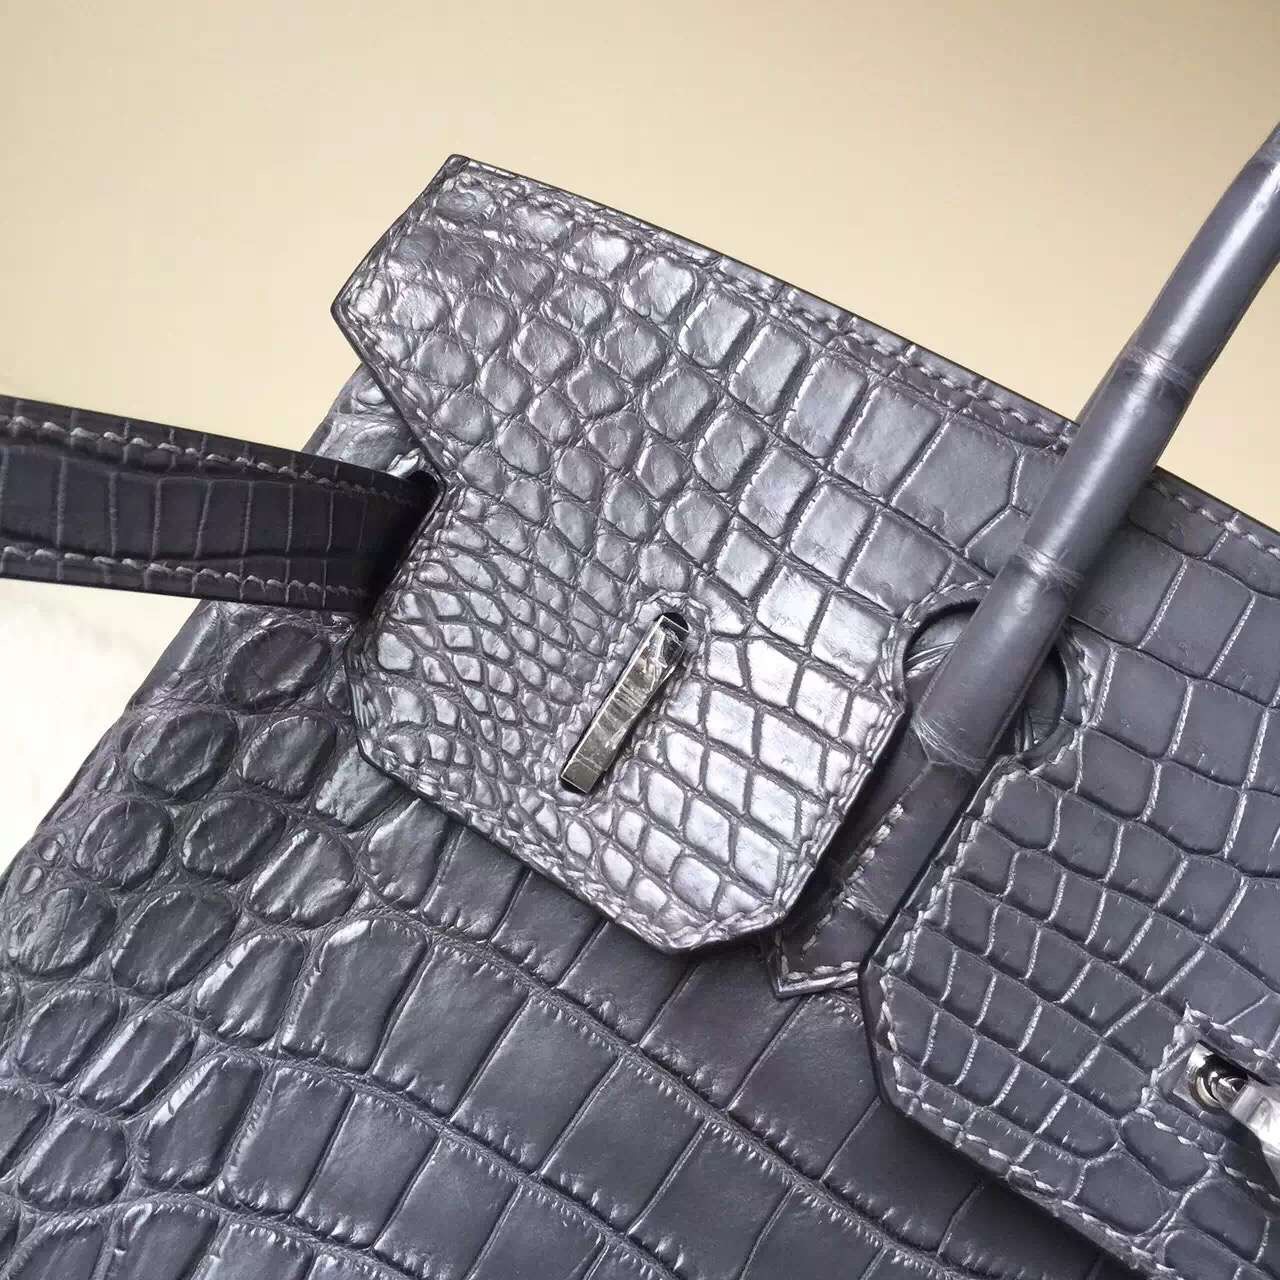 Discount Hermes Birkin Bag30cm in 8F Etain Grey Crocodile Matt Leather